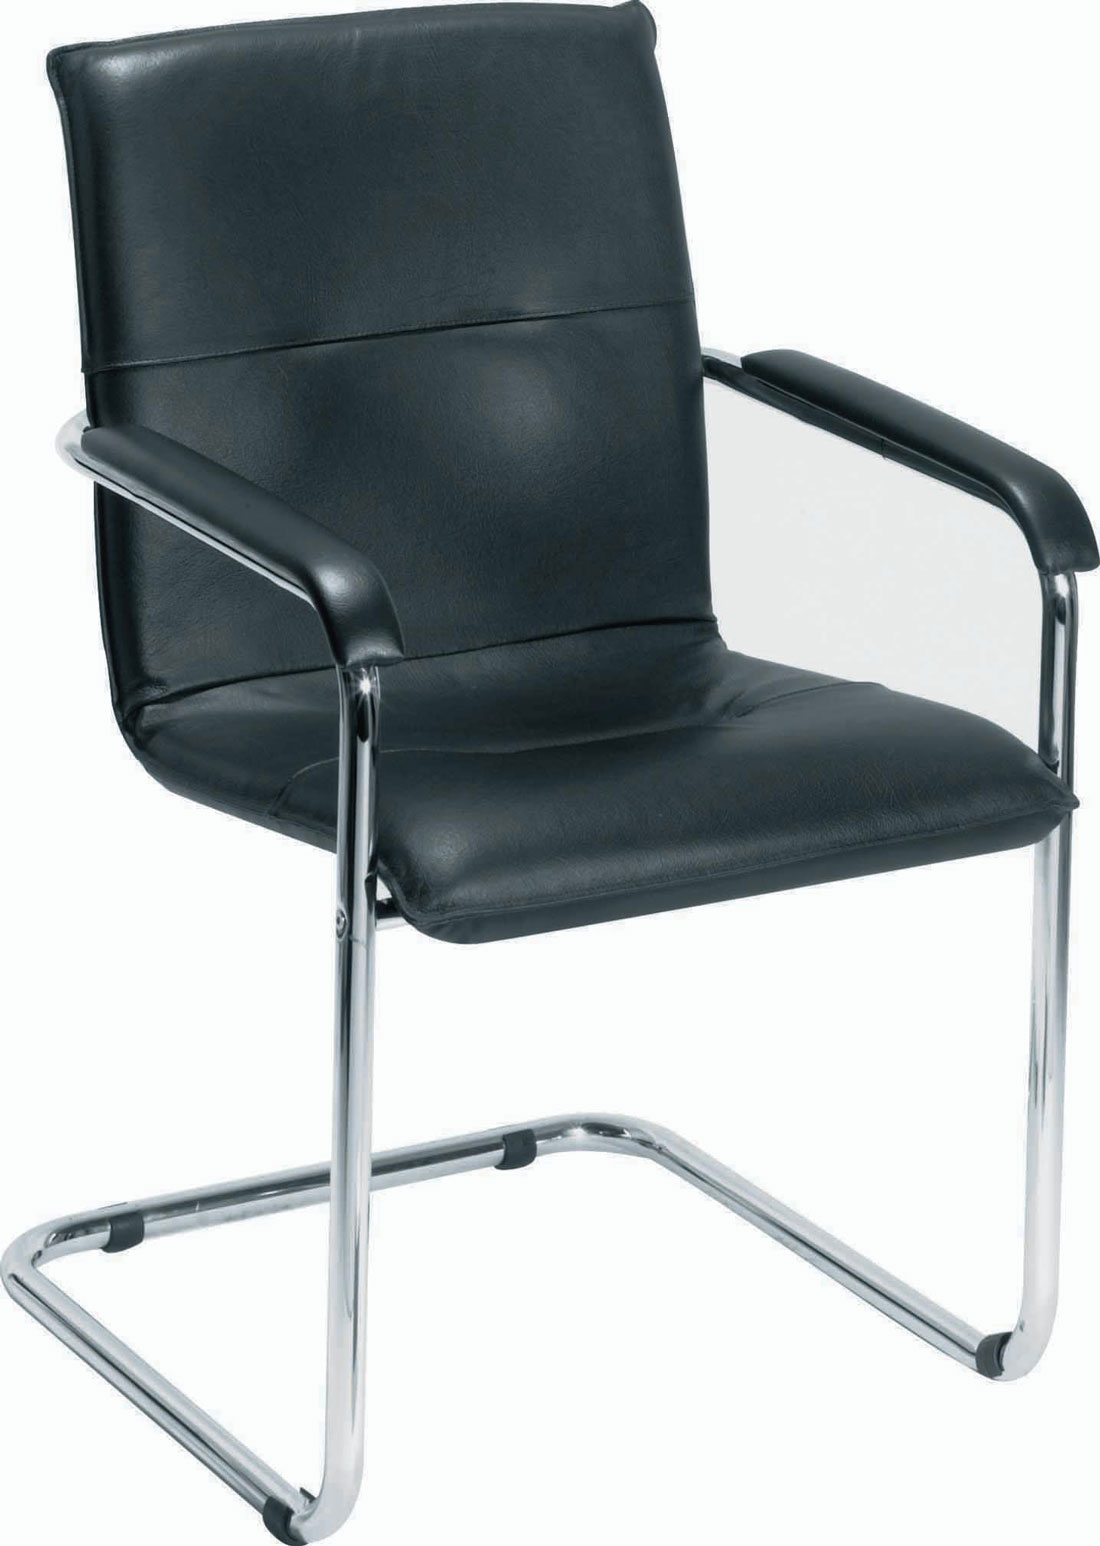 Стул стационарный. Стул стационарный Тип 2. Leather Chair Conference. Кожаный стул nowy styl купить СПБ.